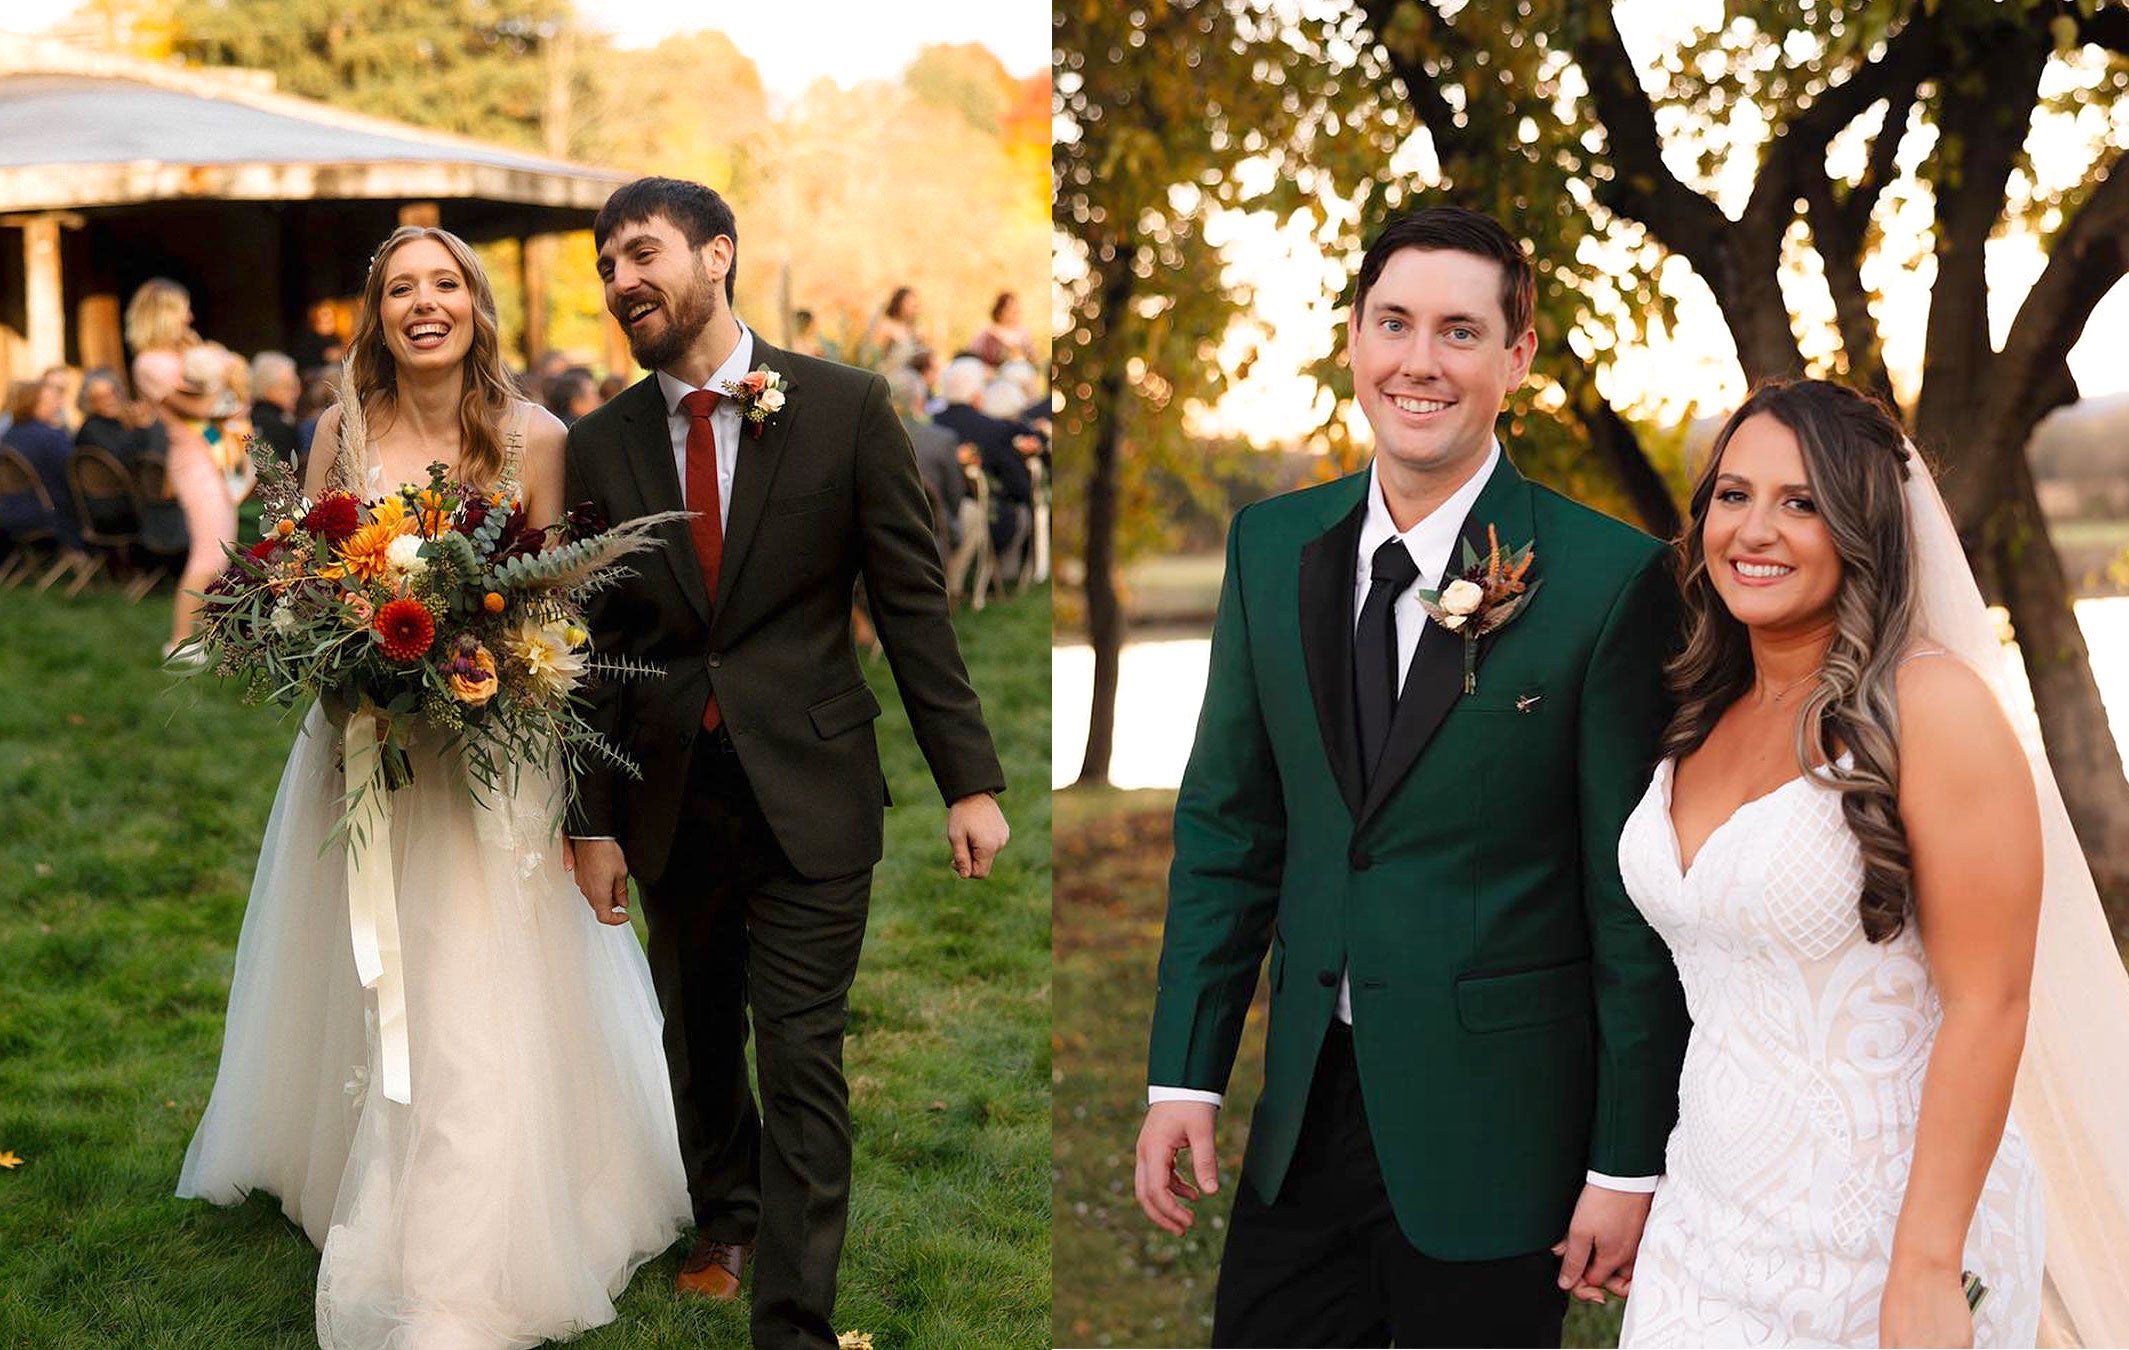 Emerald Green Men Vest Waistcoat and Straight Cut Bow Tie Suit / Tuxedo  Wedding